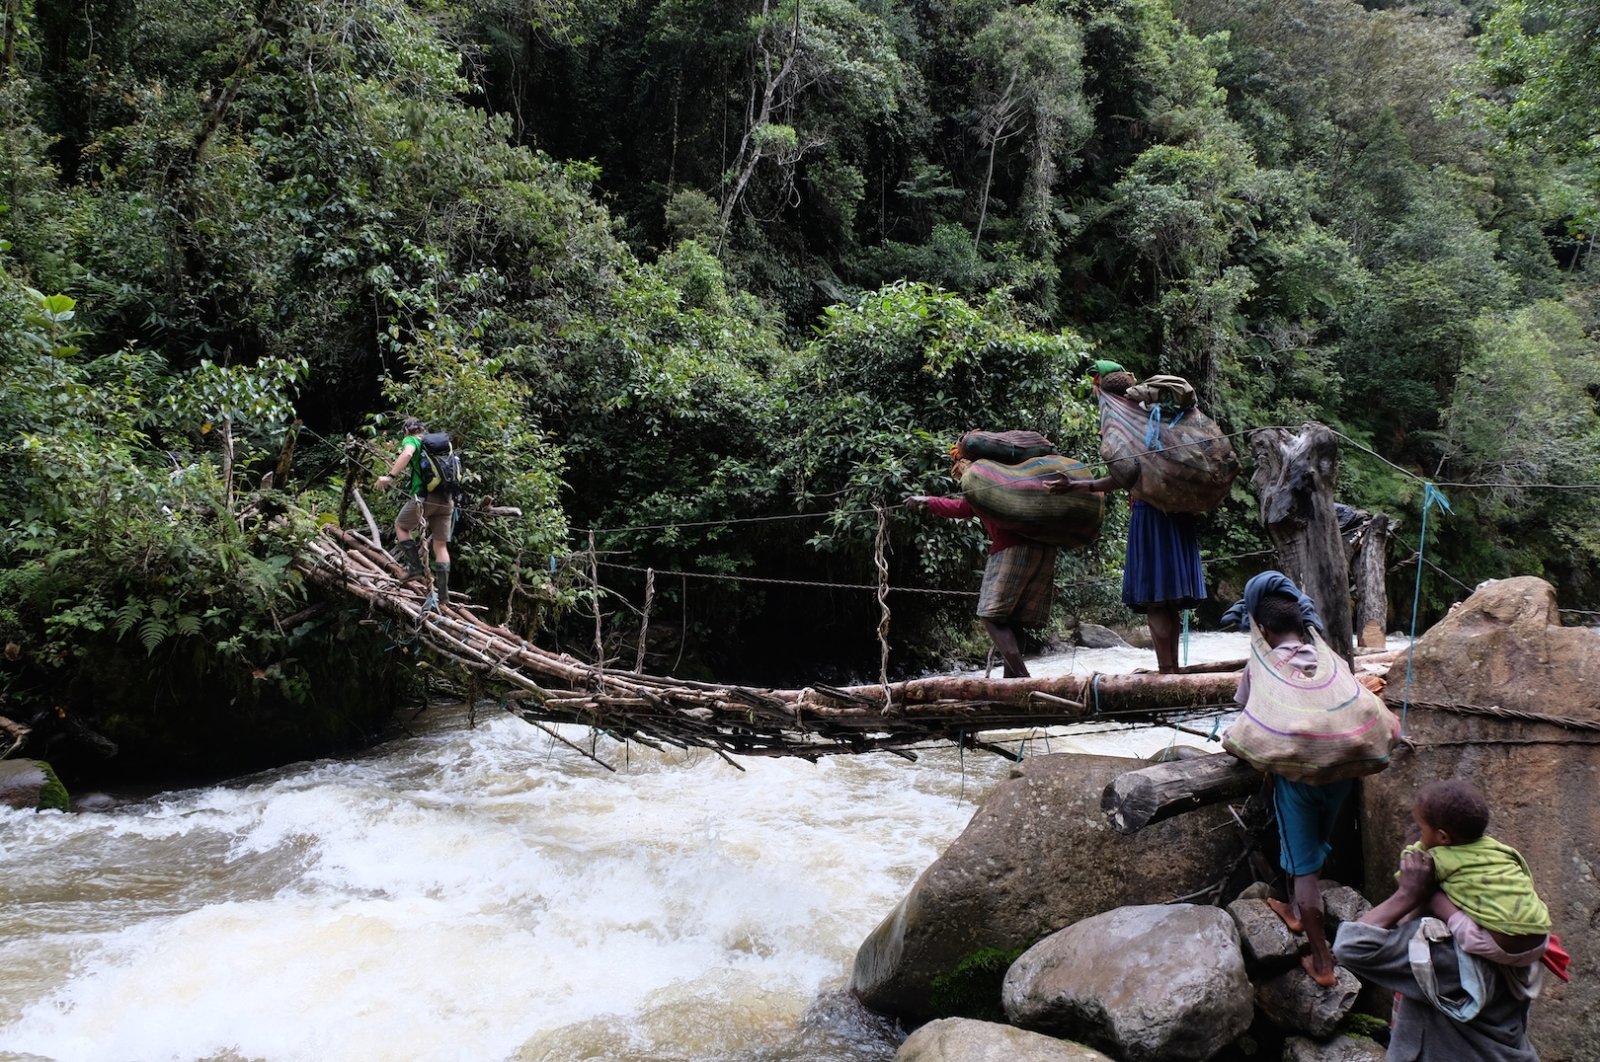 Rini Indyastuti’s porter brings the climbers food and equipment across the Kemabu River in the Intan Jaya Regency, Papua, Indonesia, June 2016. (Photo by Rini Indyastuti)